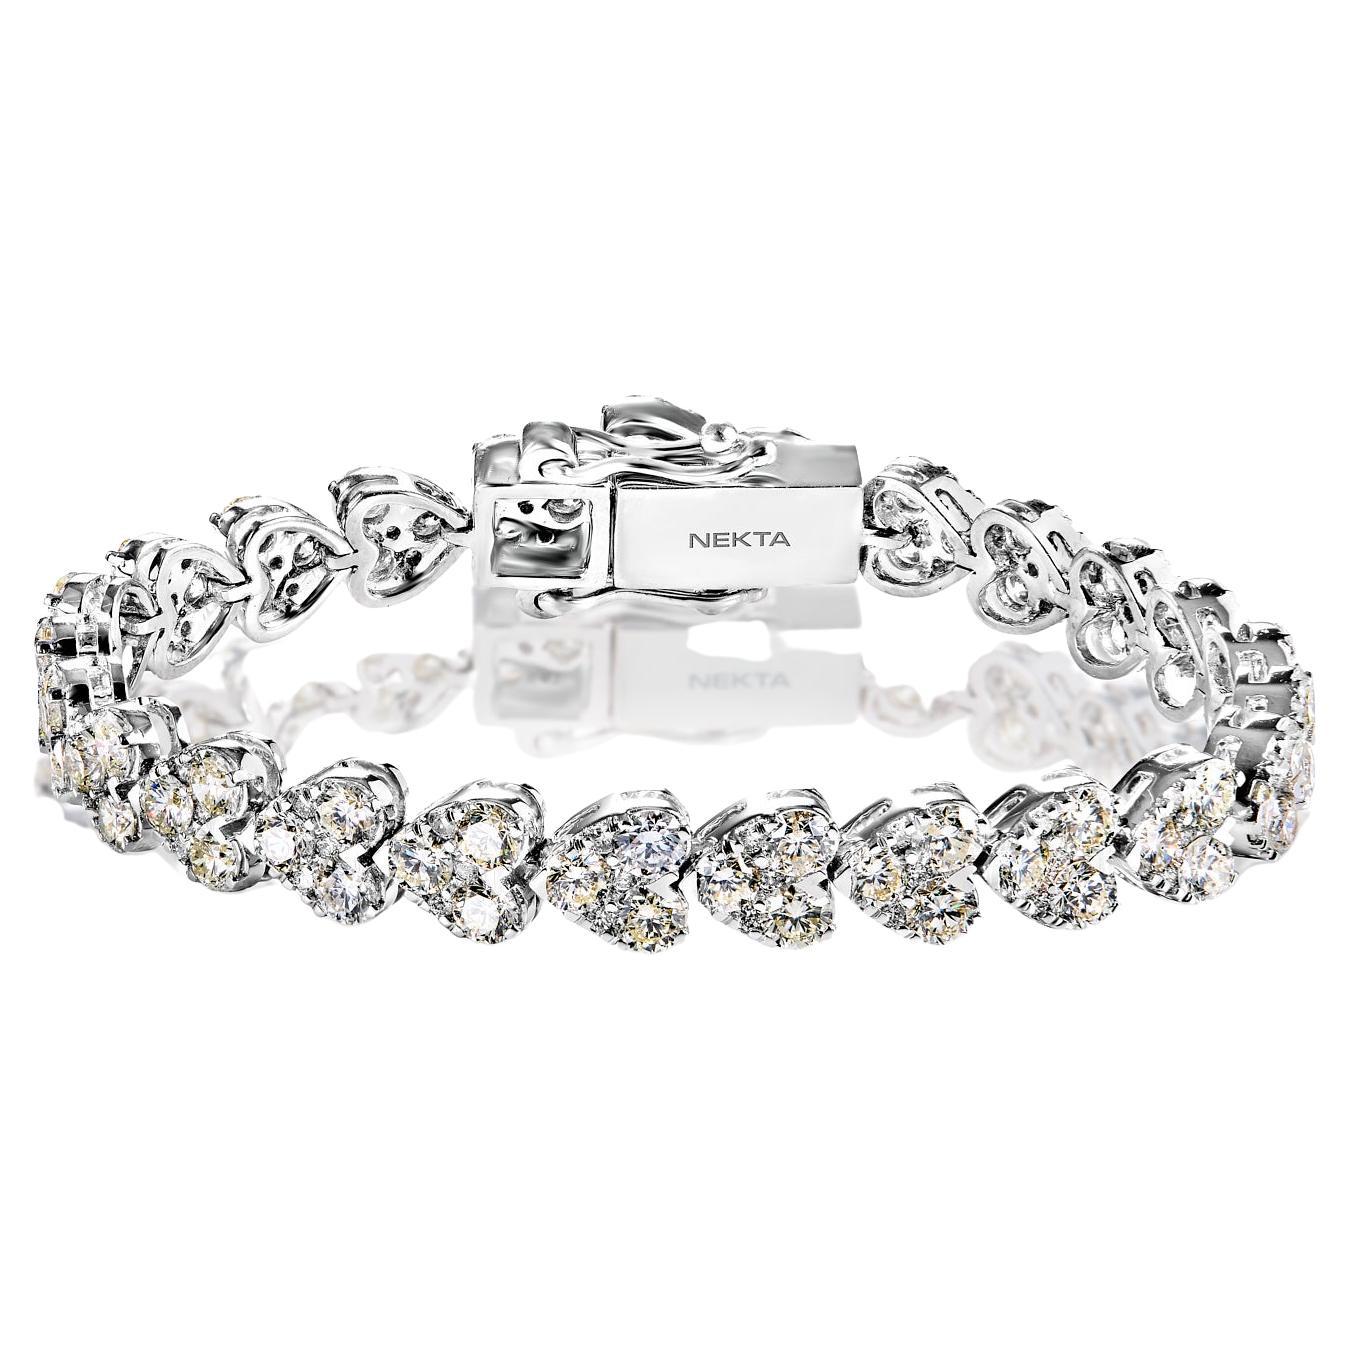 15 Carat Round Brilliant Diamond Bracelet Certified For Sale